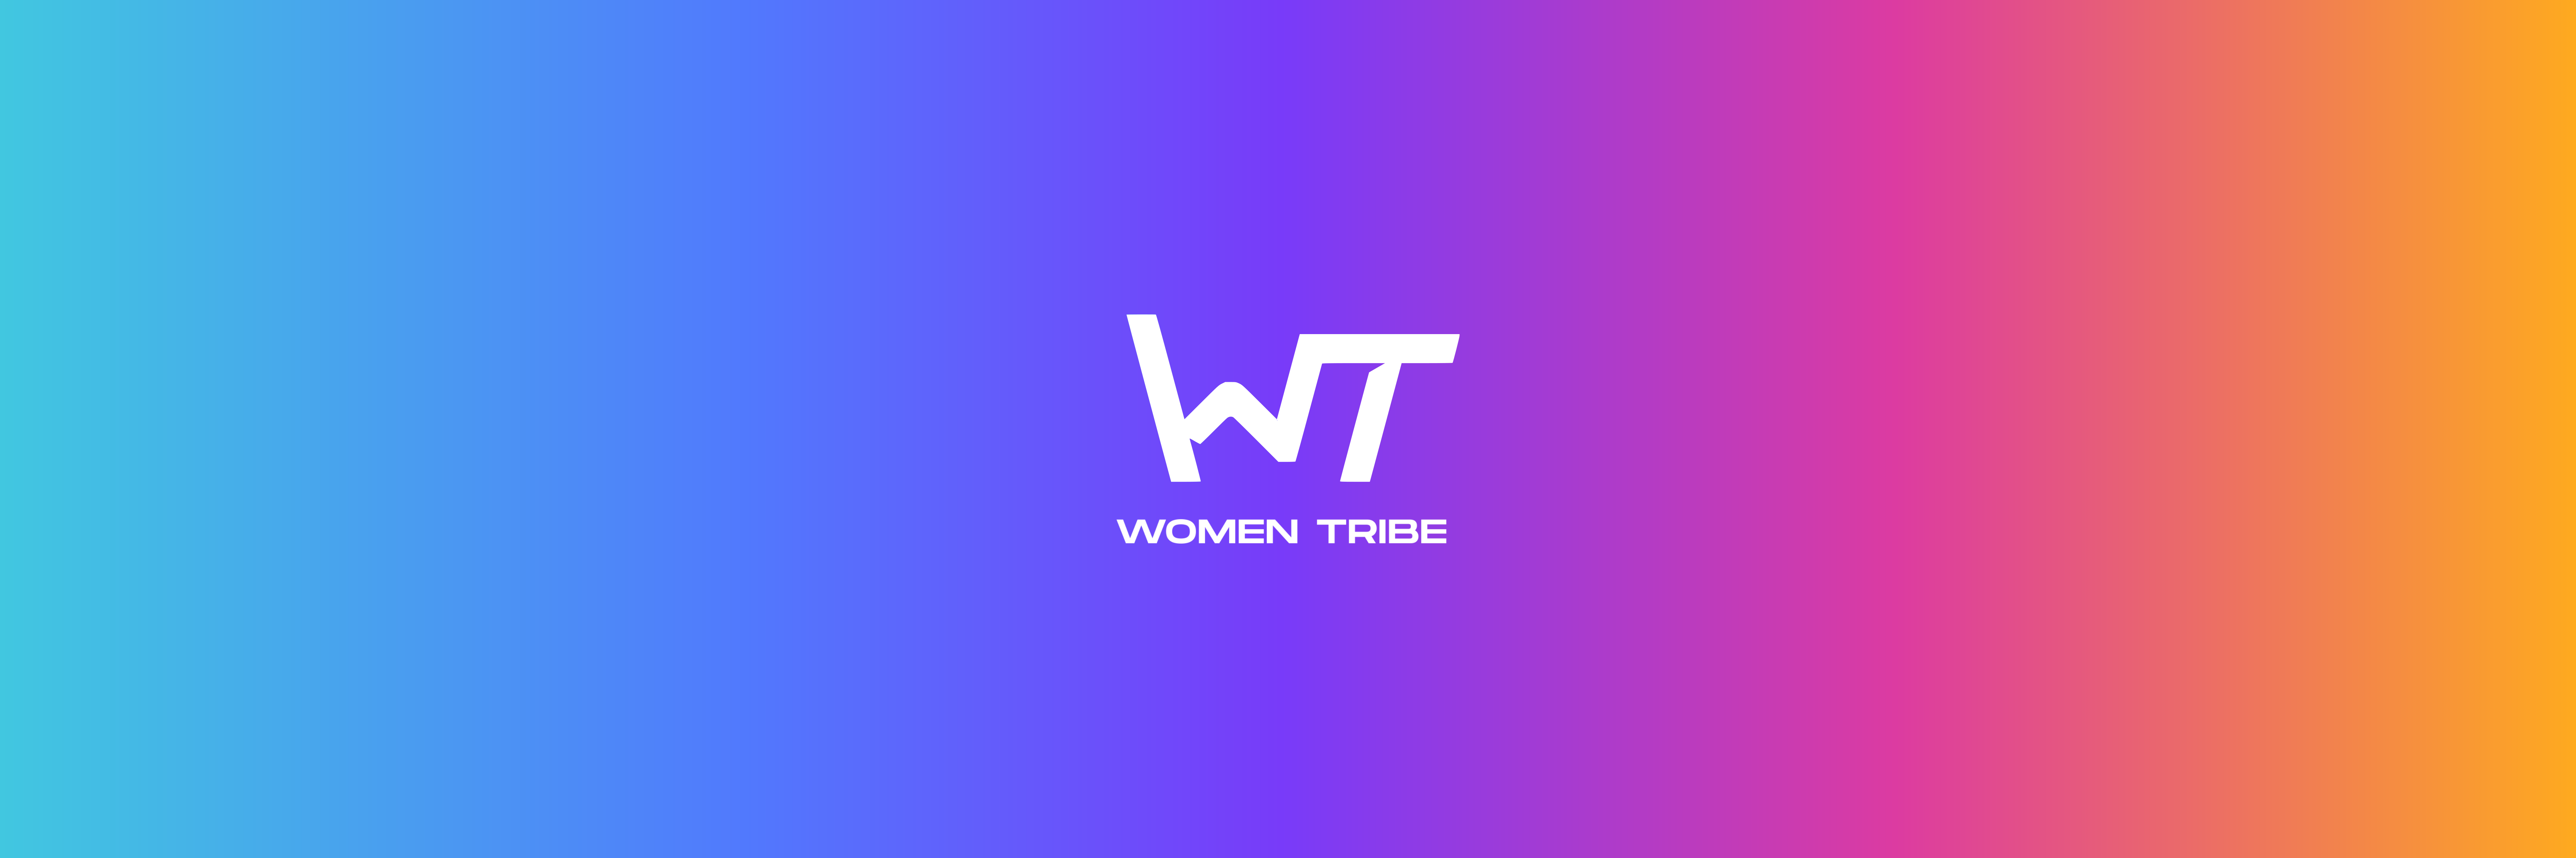 WomenTribeOfficial Banner